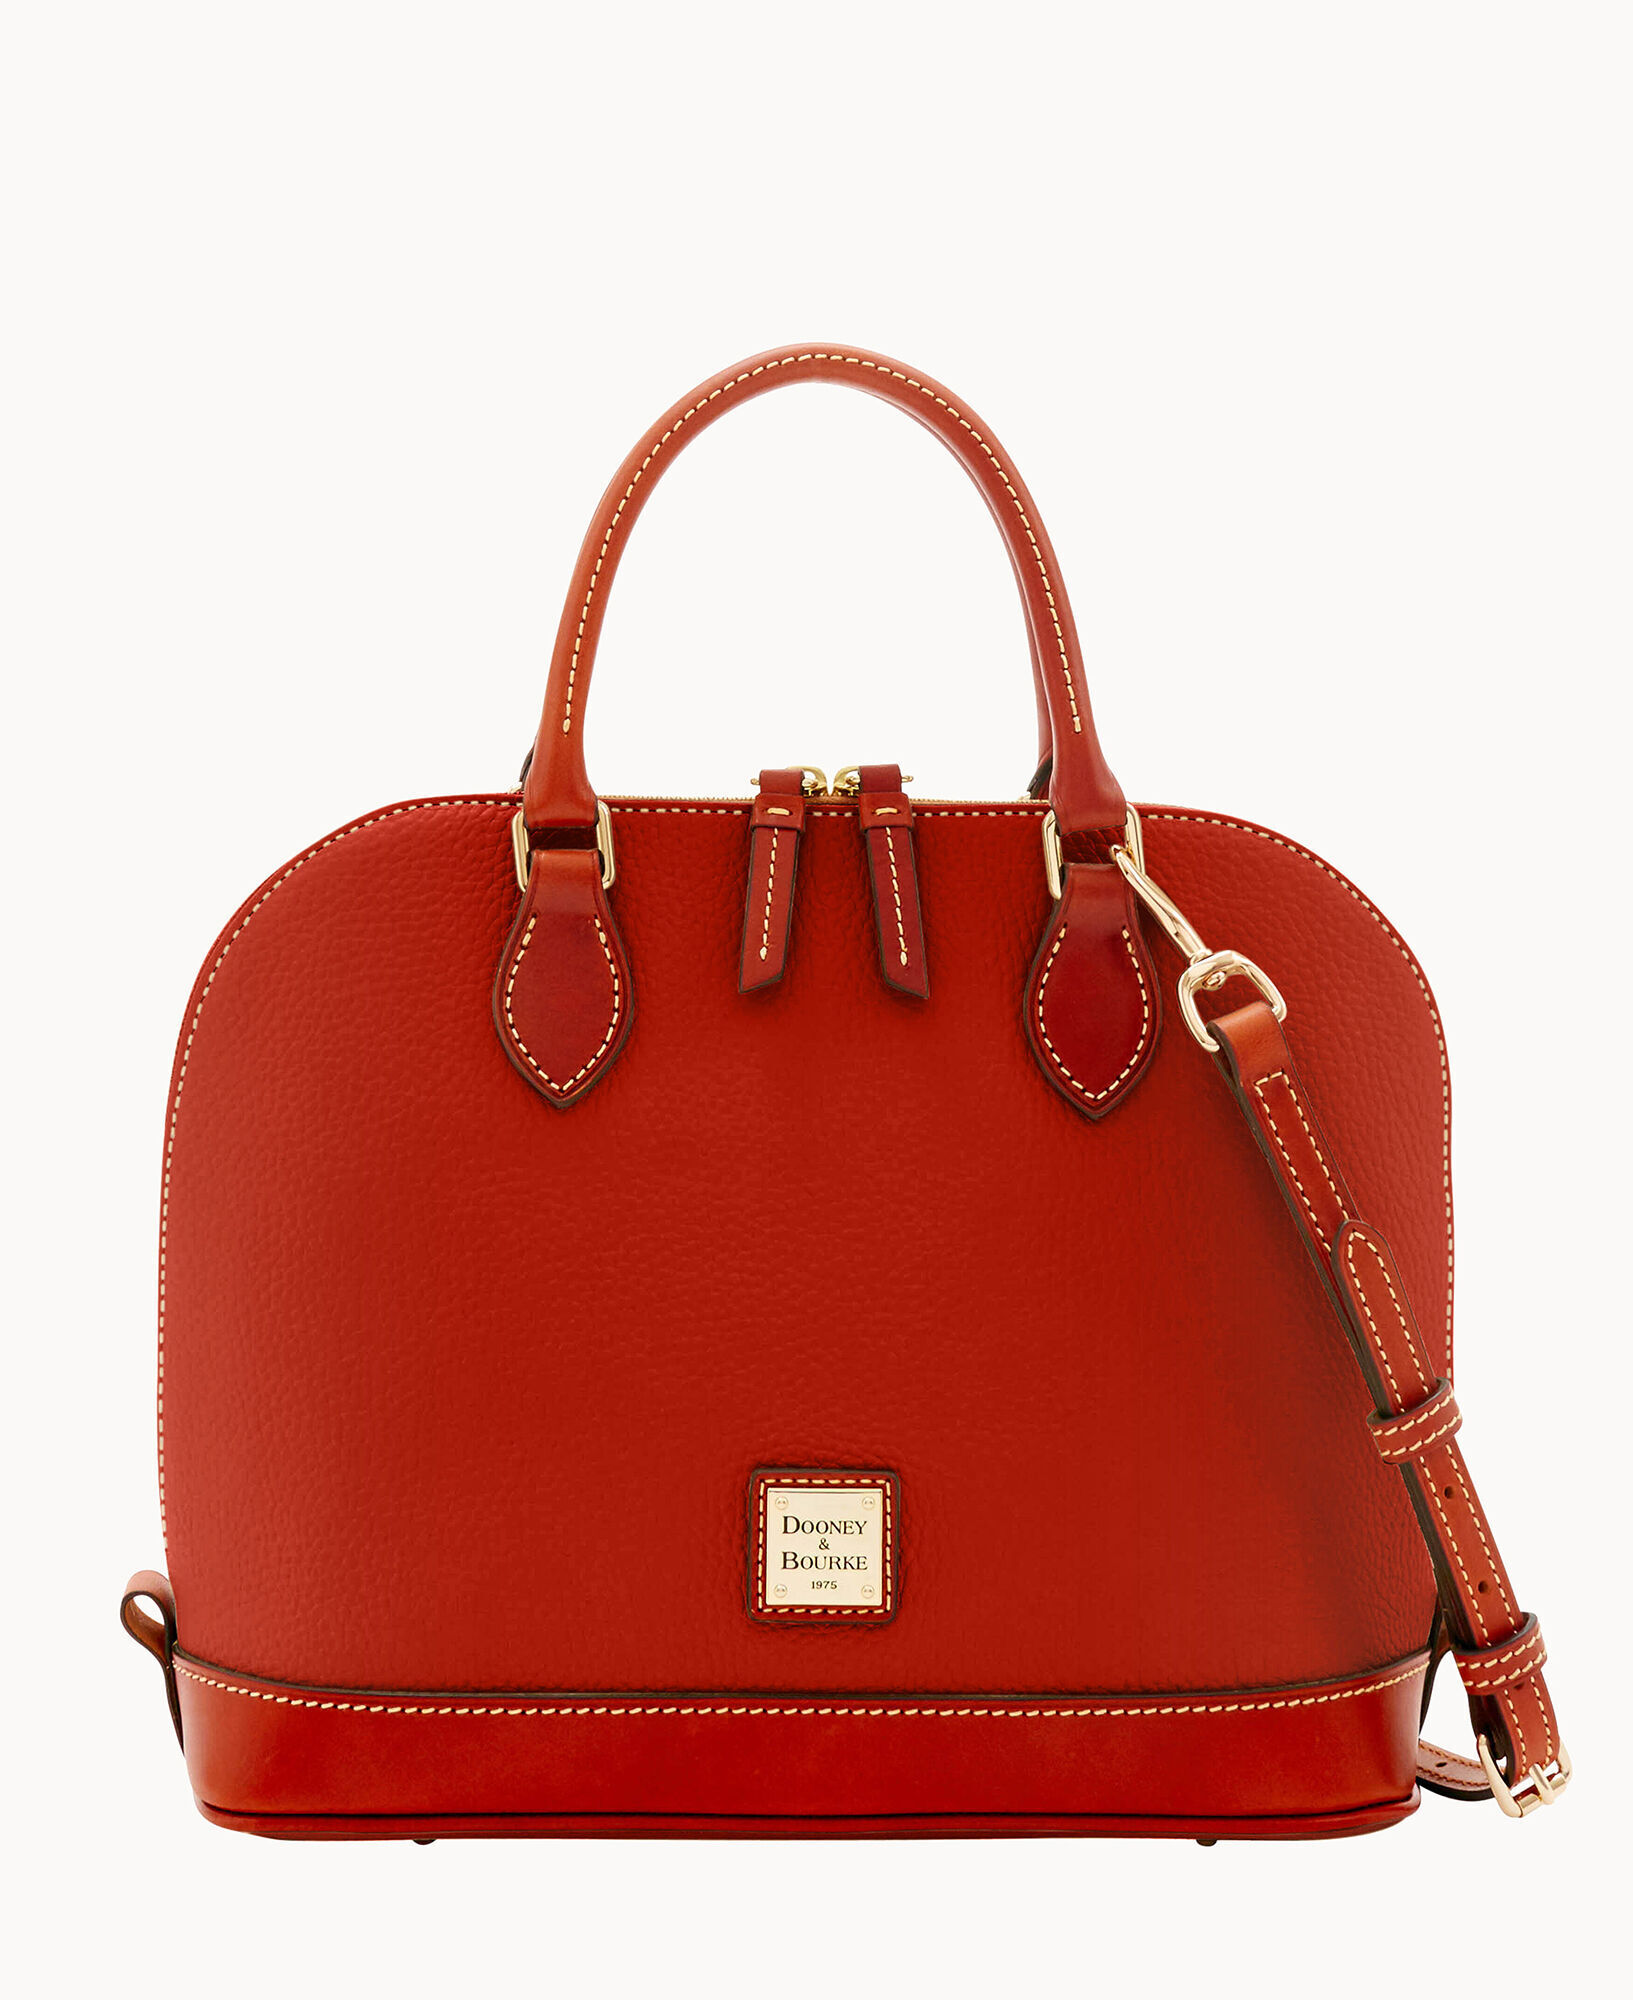 DOONEY & BOURKE DB RED AND WHITE STRIPE LARGE SLIM WRSITLET CLUTCH BAG:  Handbags: Amazon.com